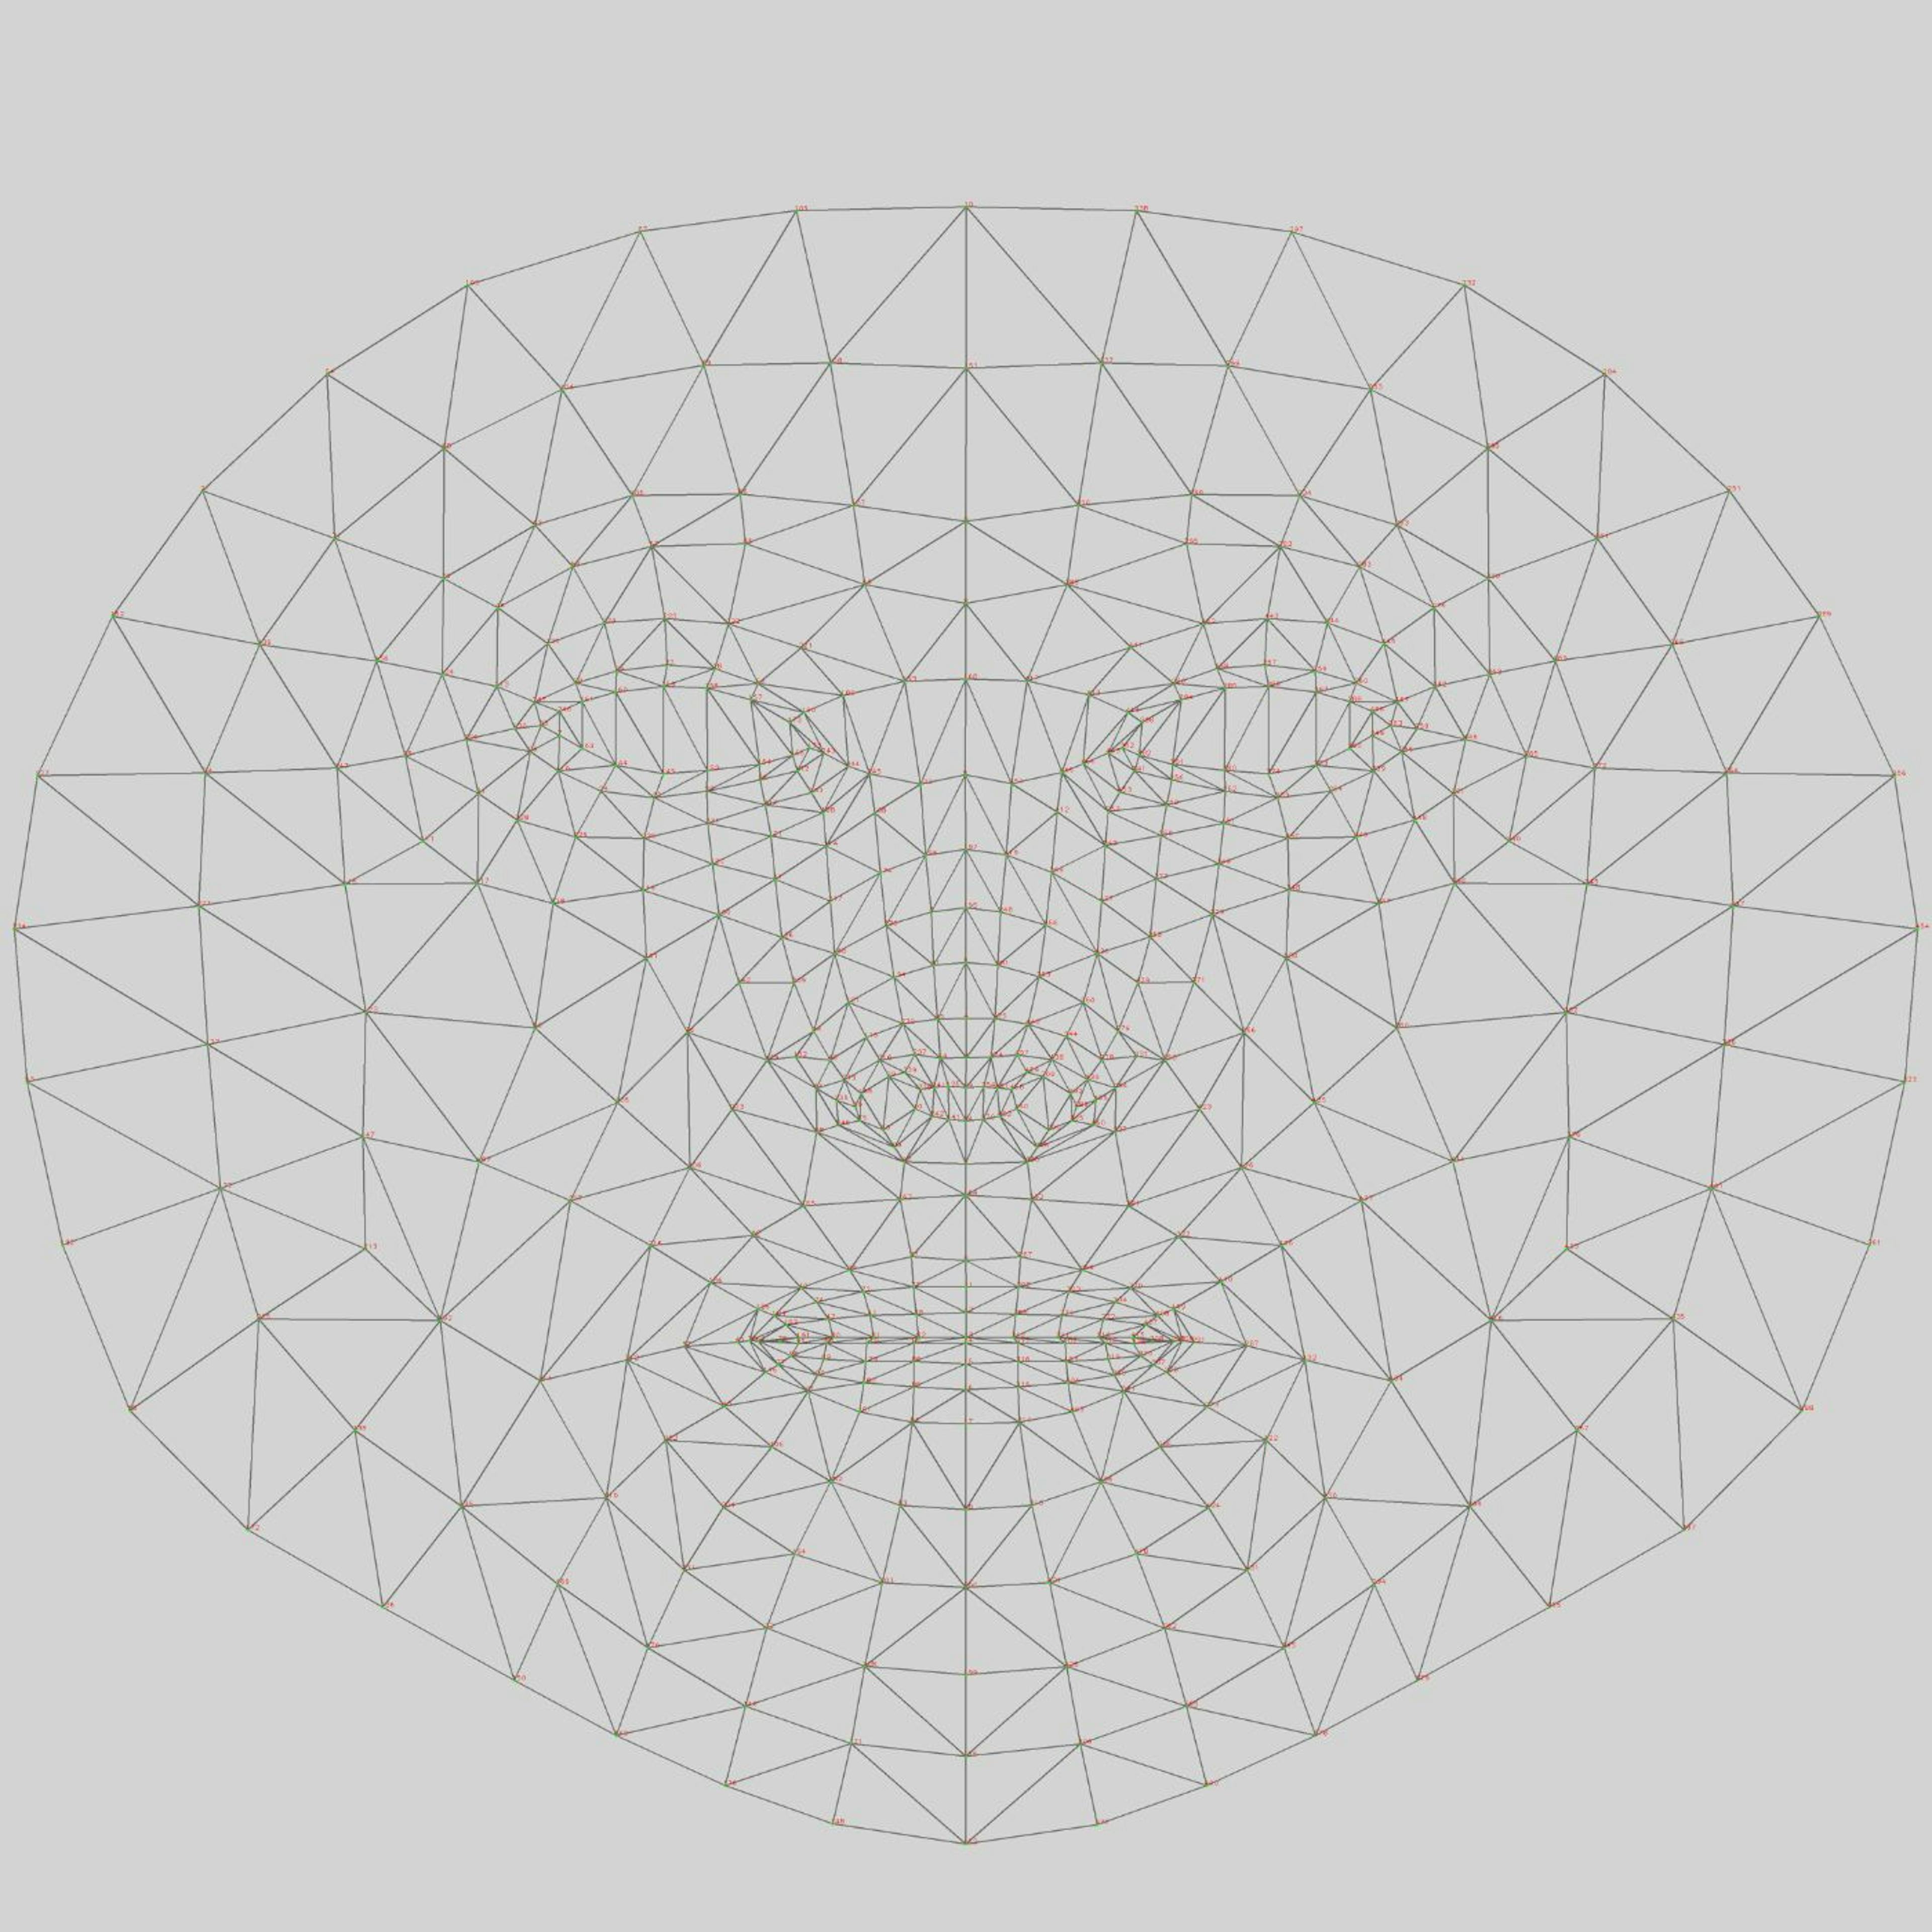 source: https://github.com/google/mediapipe/blob/a908d668c730da128dfa8d9f6bd25d519d006692/mediapipe/modules/face_geometry/data/canonical_face_model_uv_visualization.png